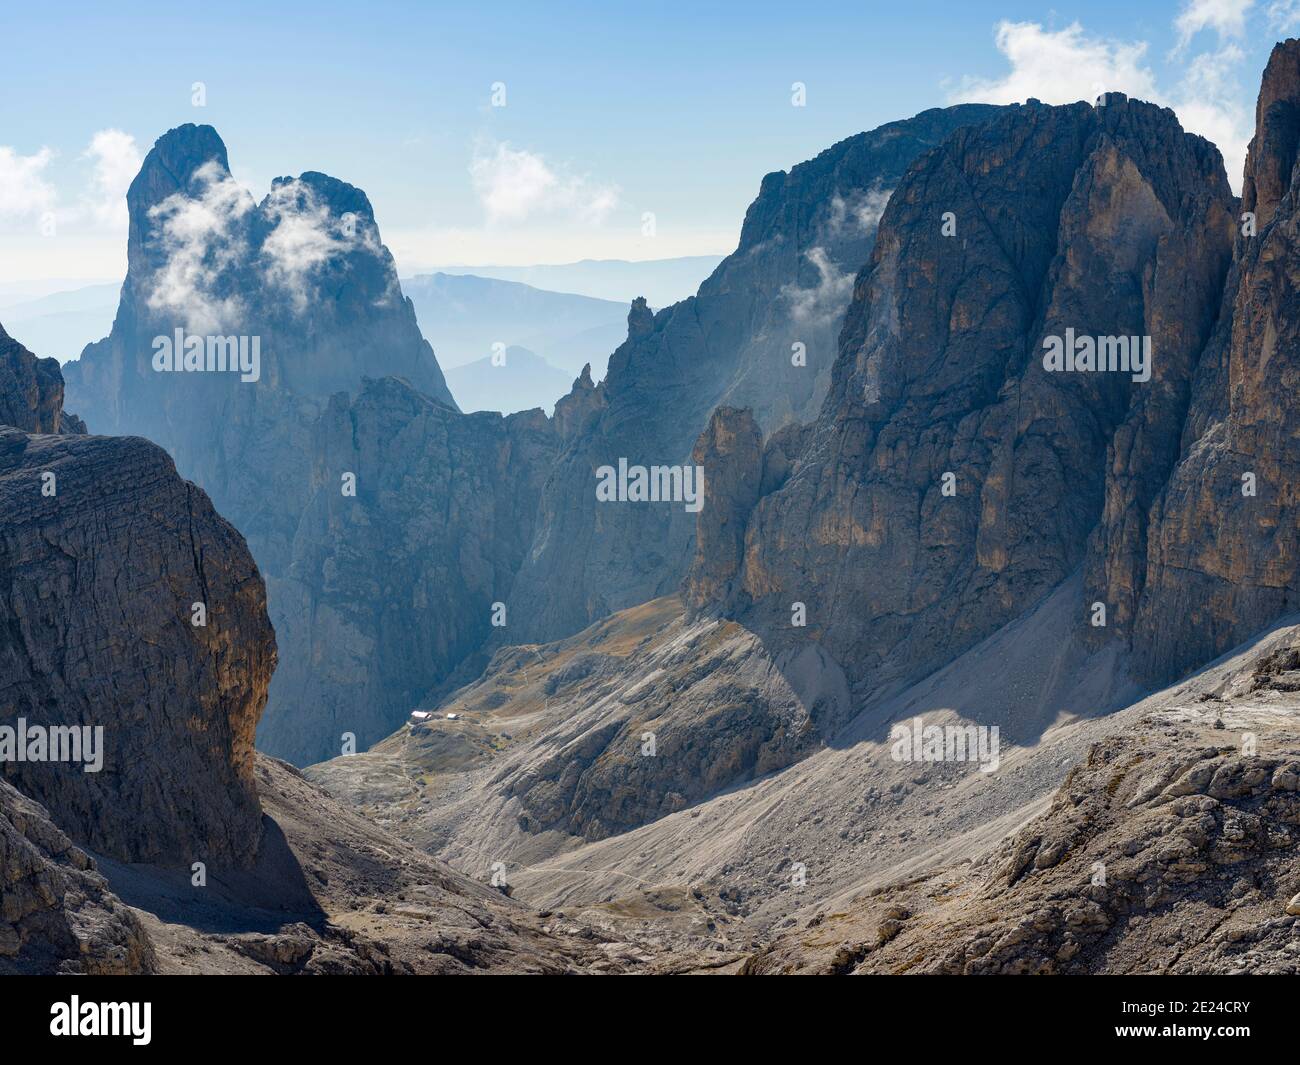 Sass Maor and Rifugio Pradidali. The alpine plateau Altipiano delle Pale di San Martino in the Pala group in the dolomites of the Trentino. The Pala g Stock Photo